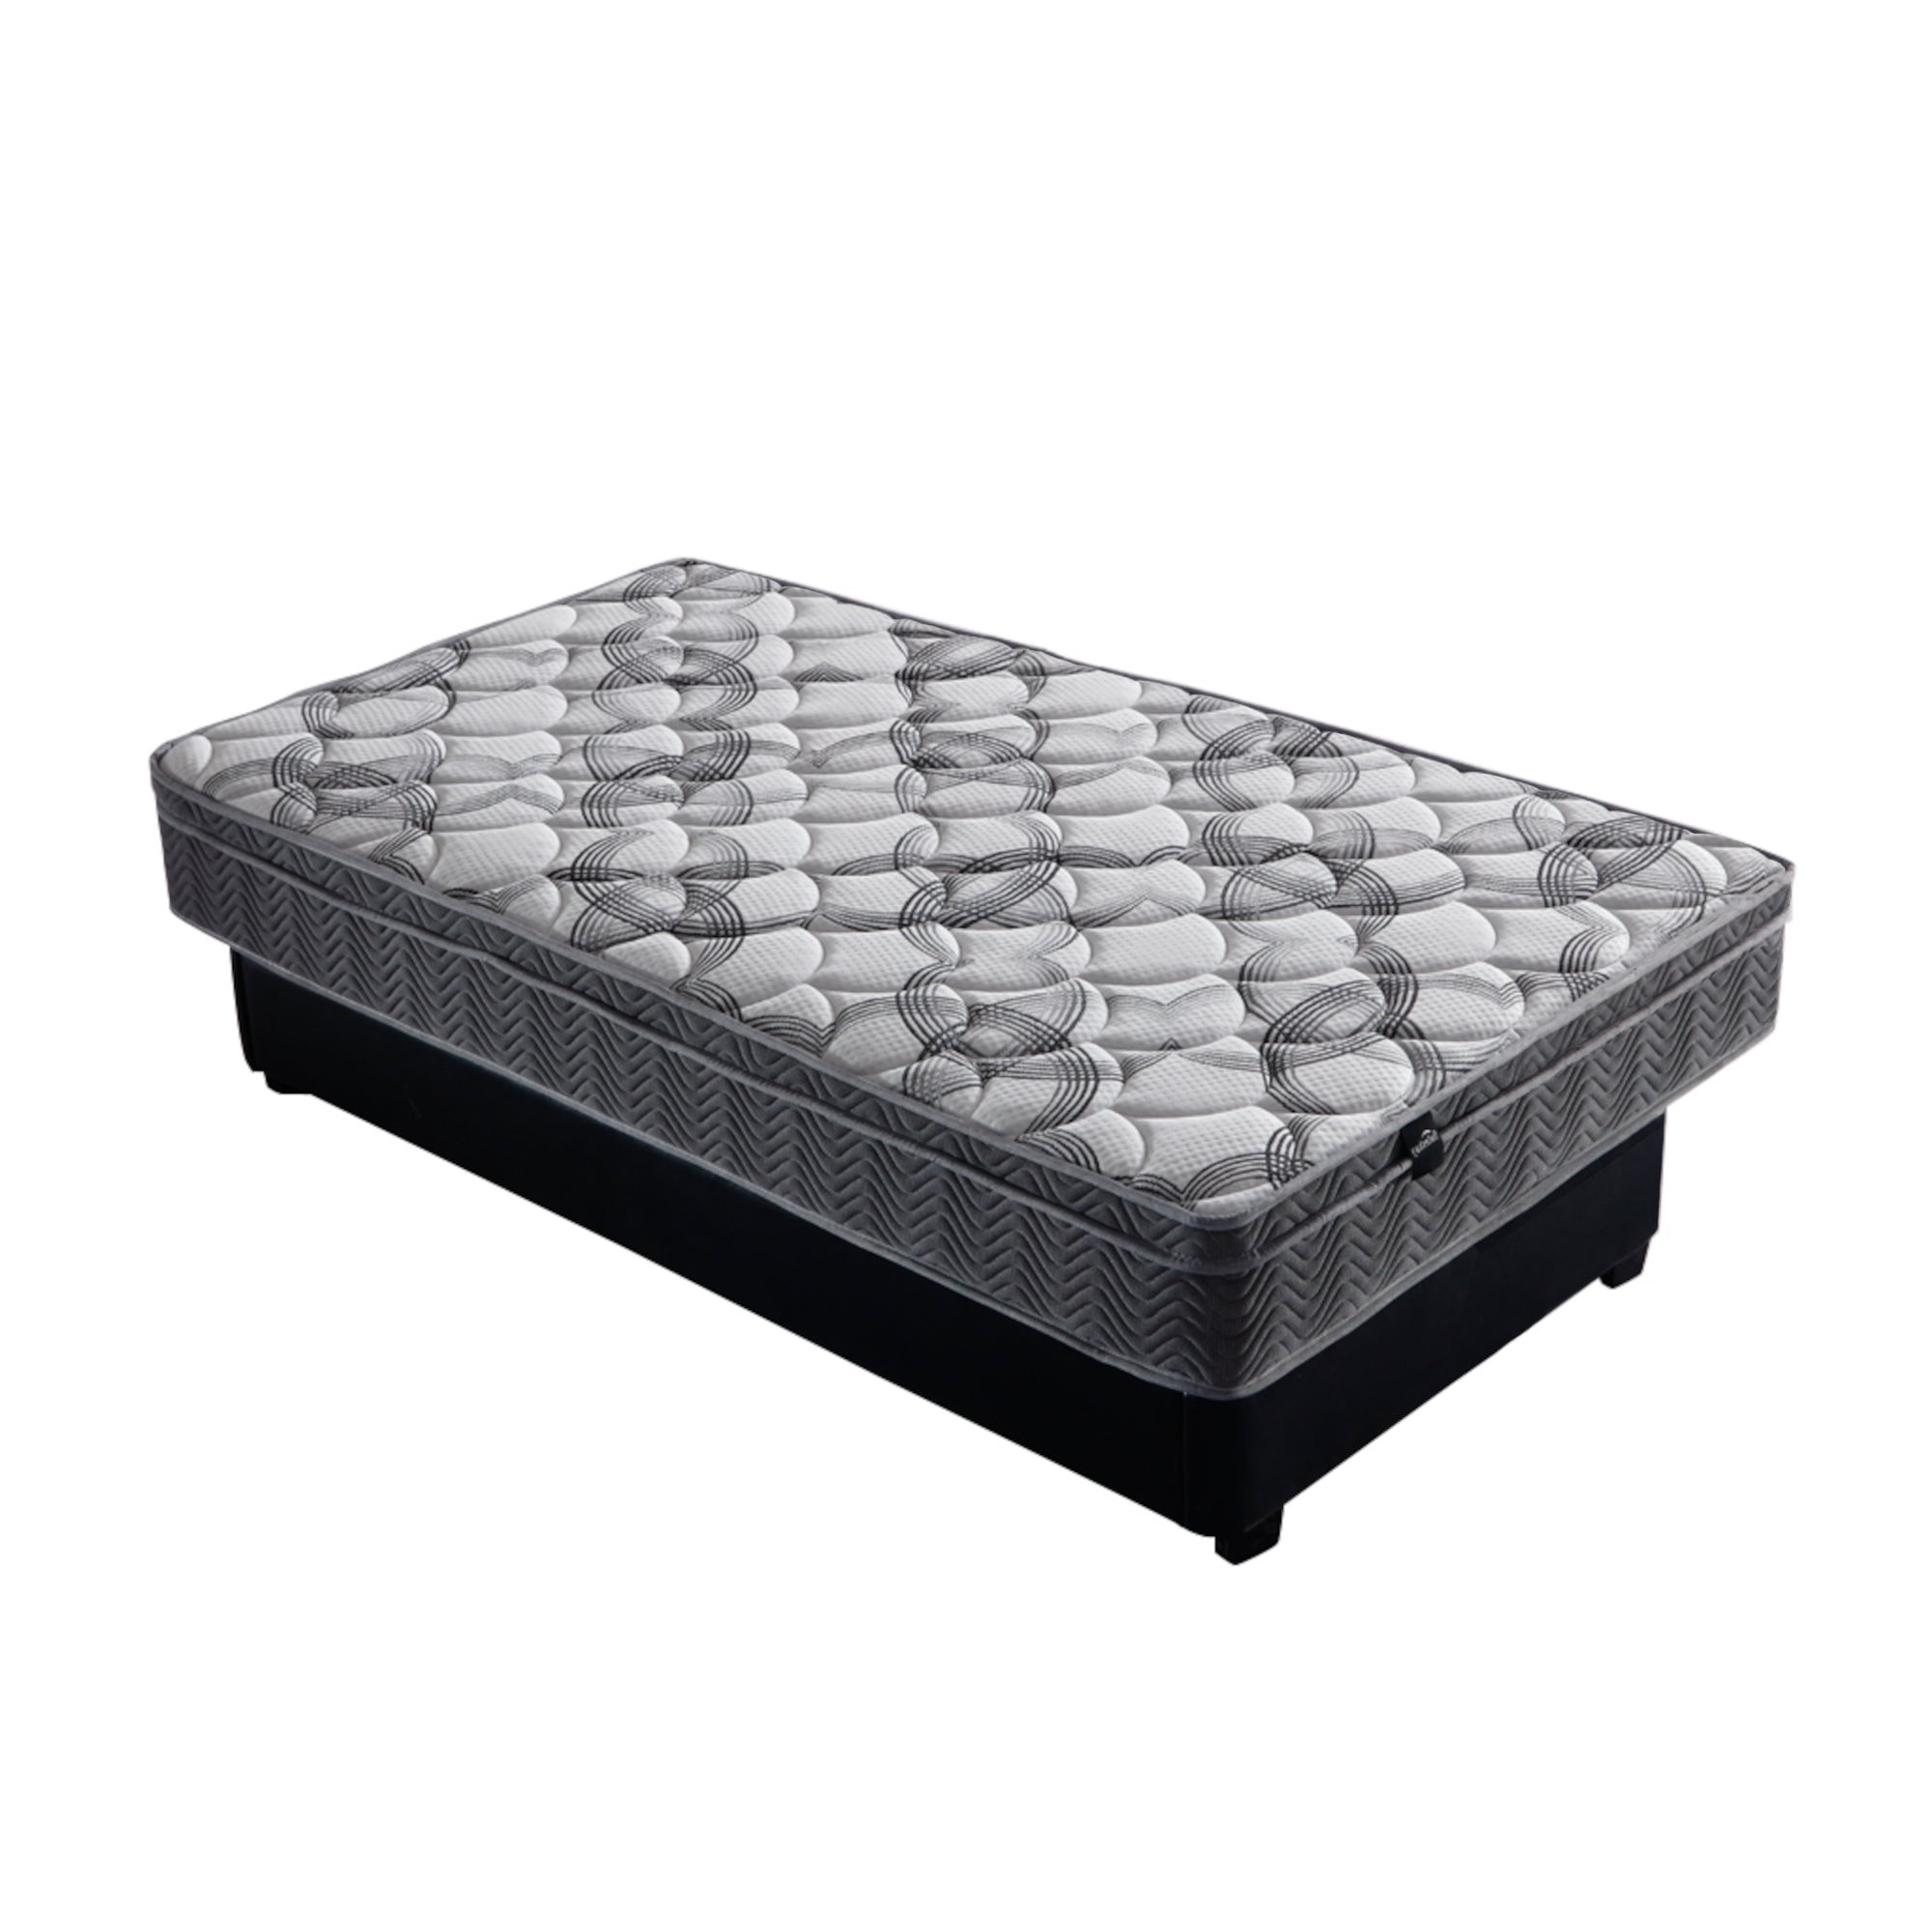 Foret Bed Mattress King Single 5 Zone Euro Top Bedding Foam Medium Firm 25cm